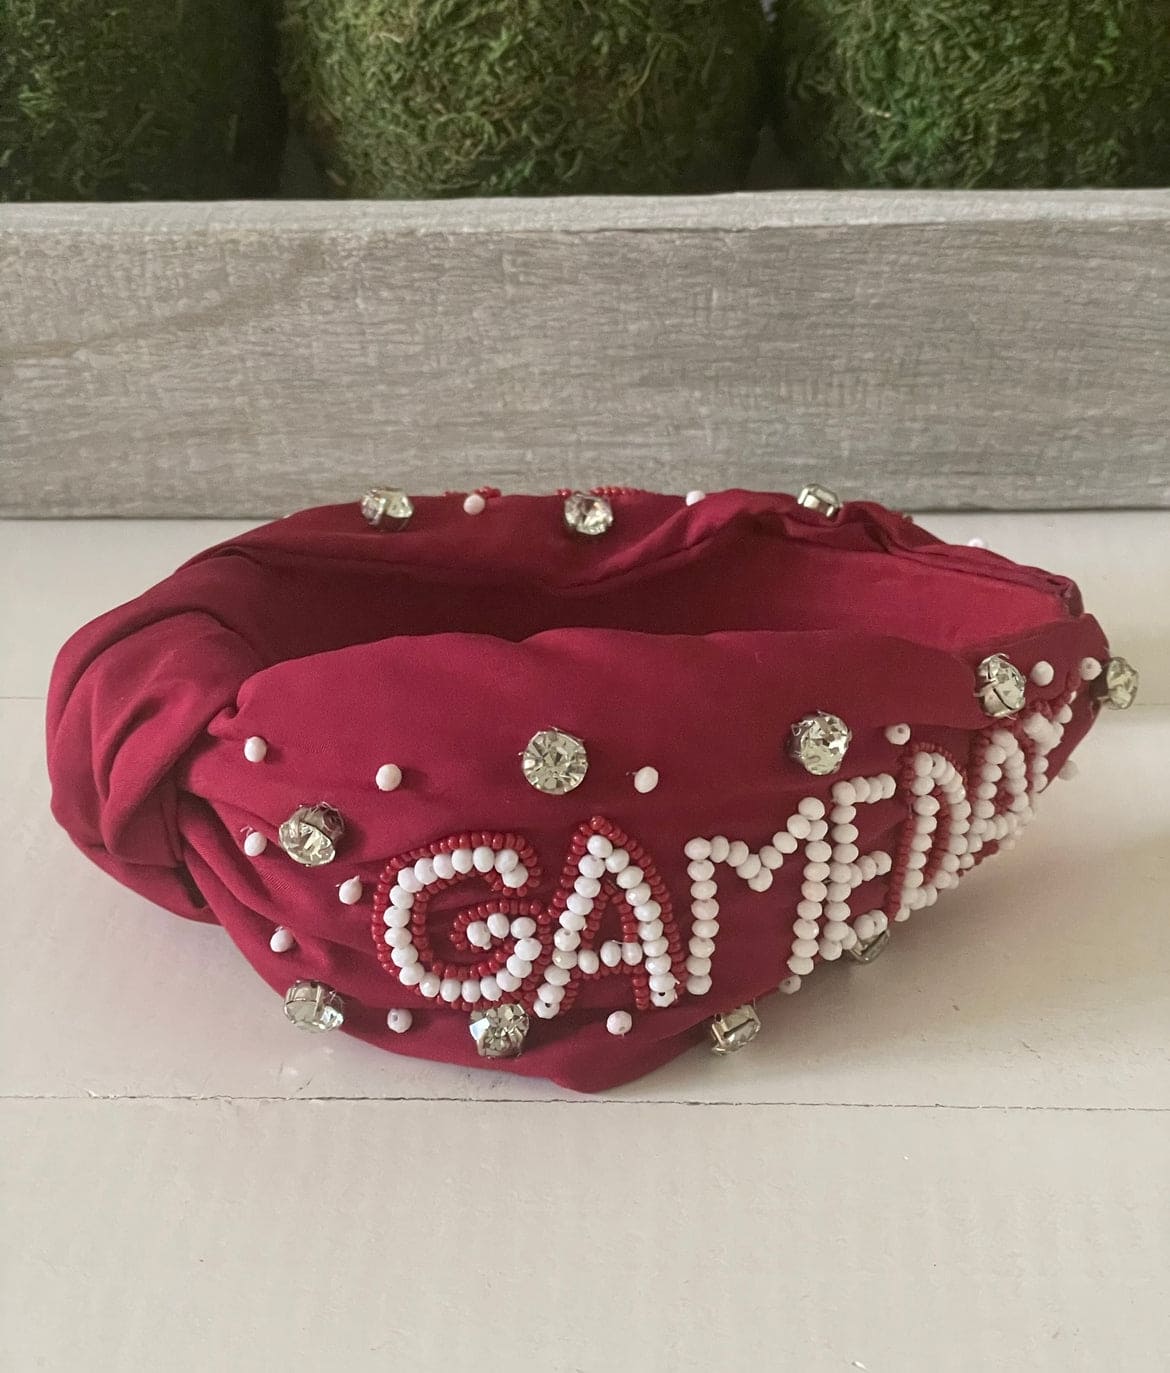 Game Day headband